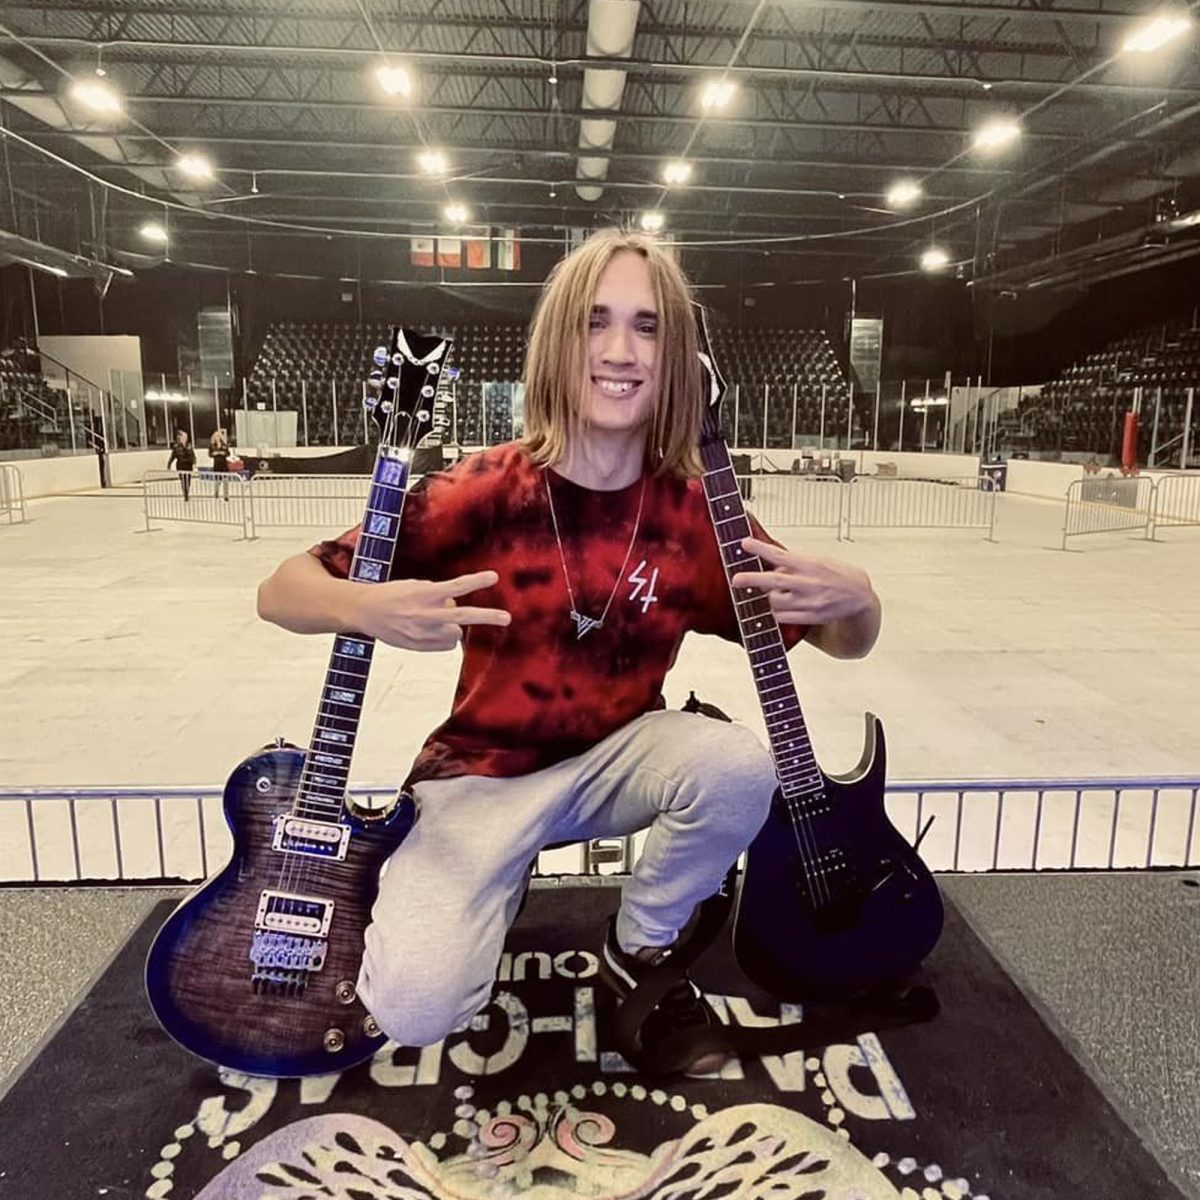 Teenage guitar virtuoso Gavin Brink poses with his instruments at a venue.